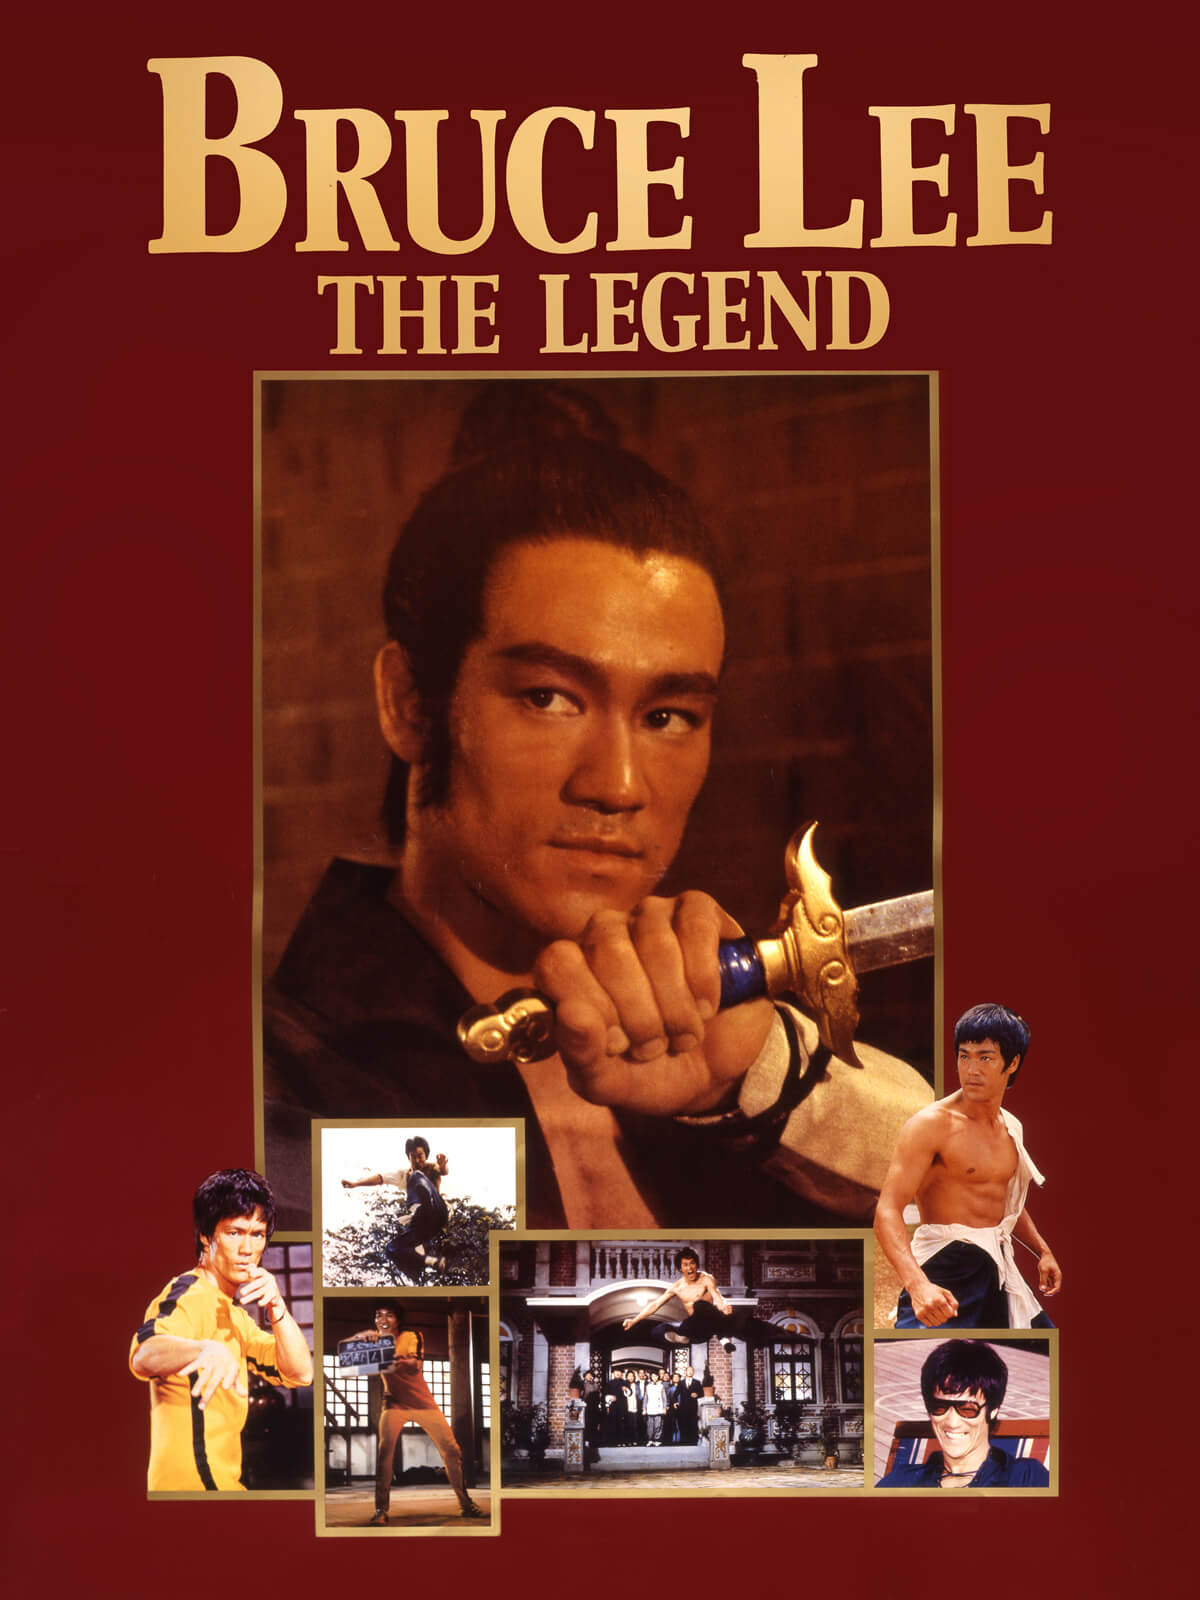 Bruce Lee, The Legend